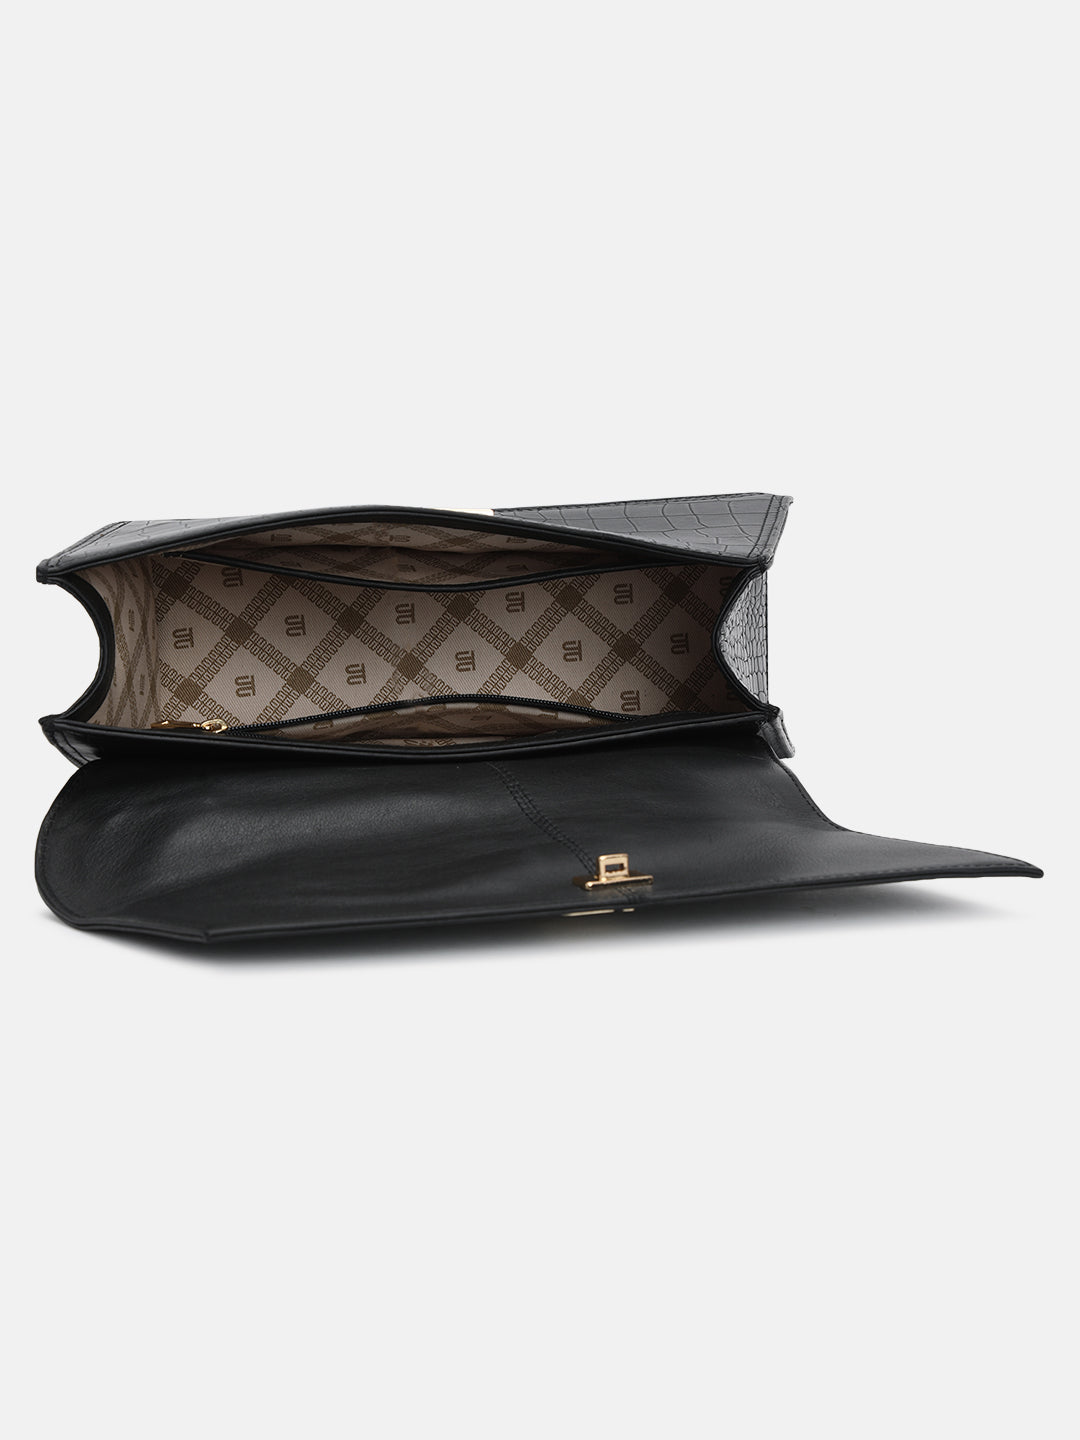 BAGATT Black Top Handle Bag